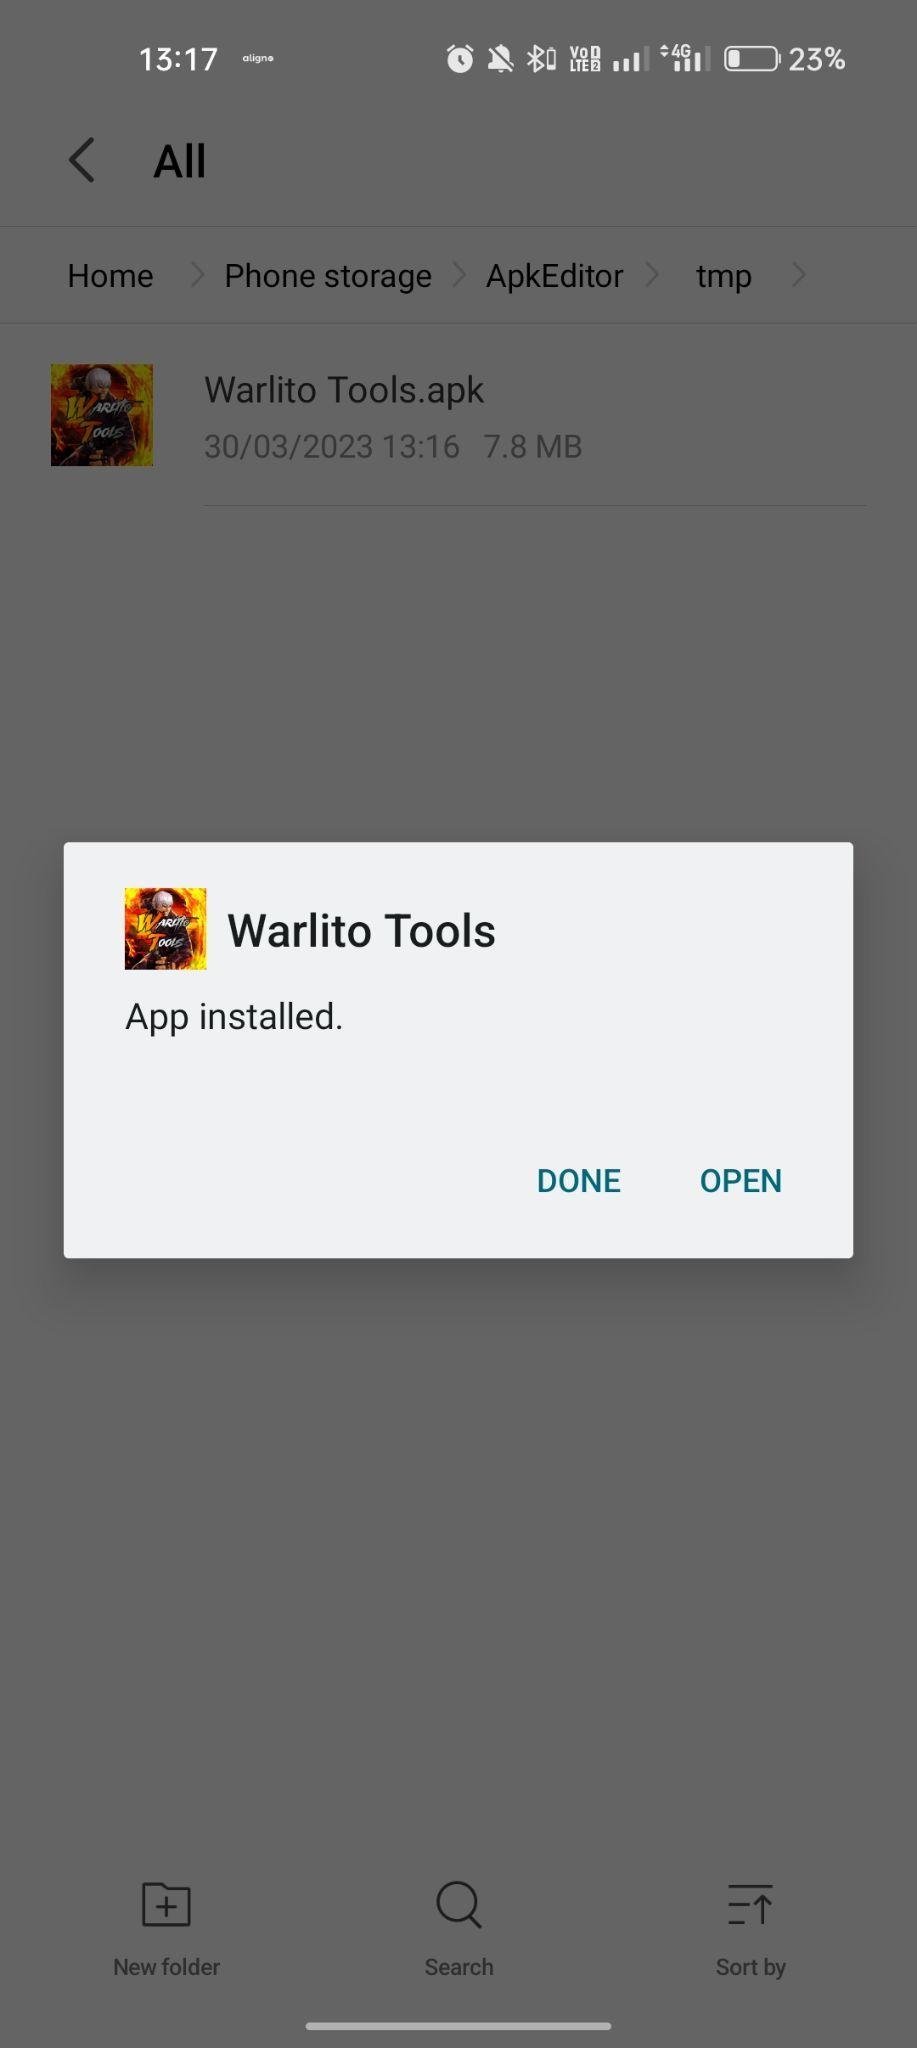 Warlito Tools apk installed